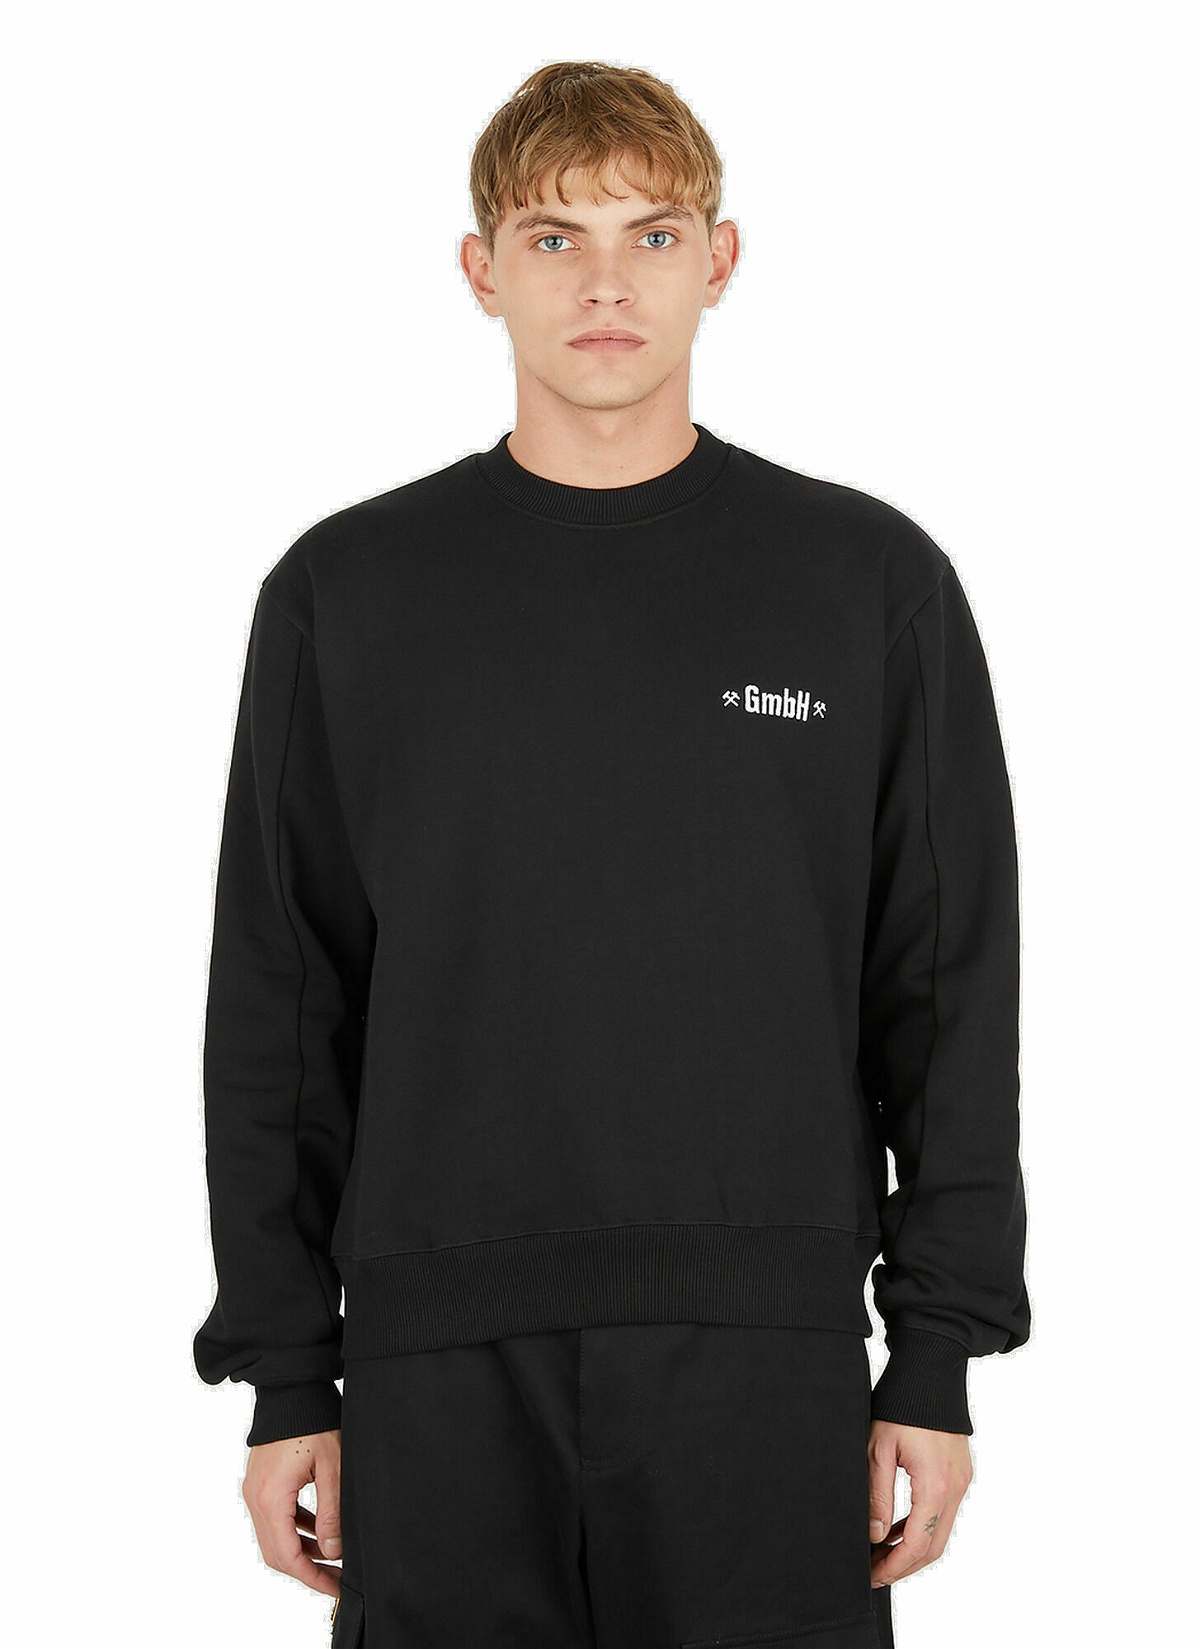 Photo: Screen Print Sweatshirt in Black